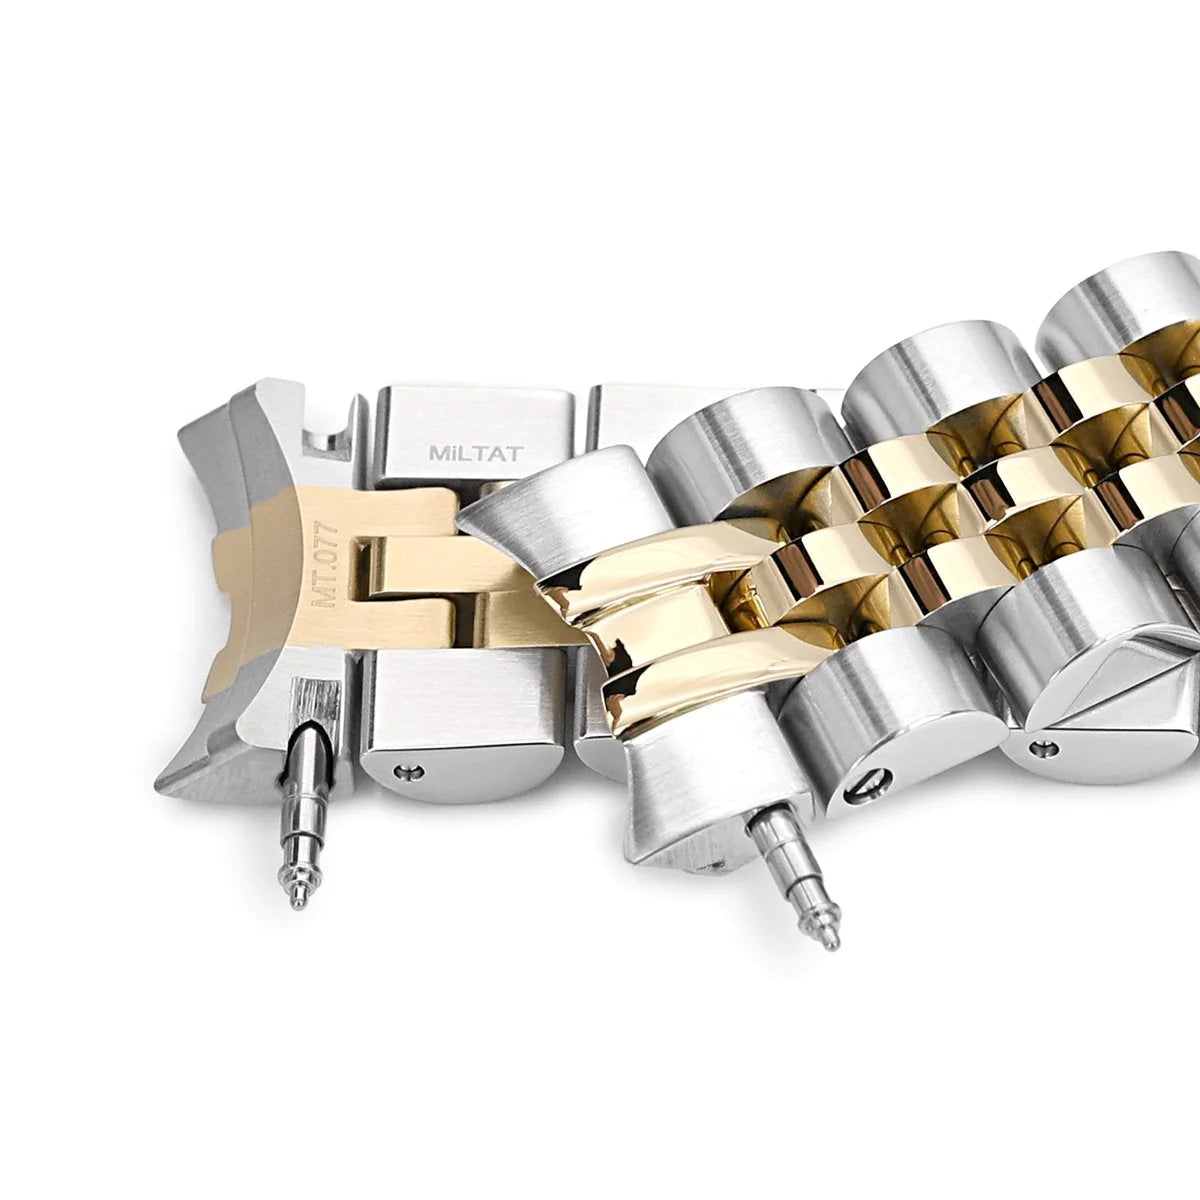 [STRAPCODE] Angus-J Jub Louis Bracelet for Seiko SARB035 - Silver / Gold